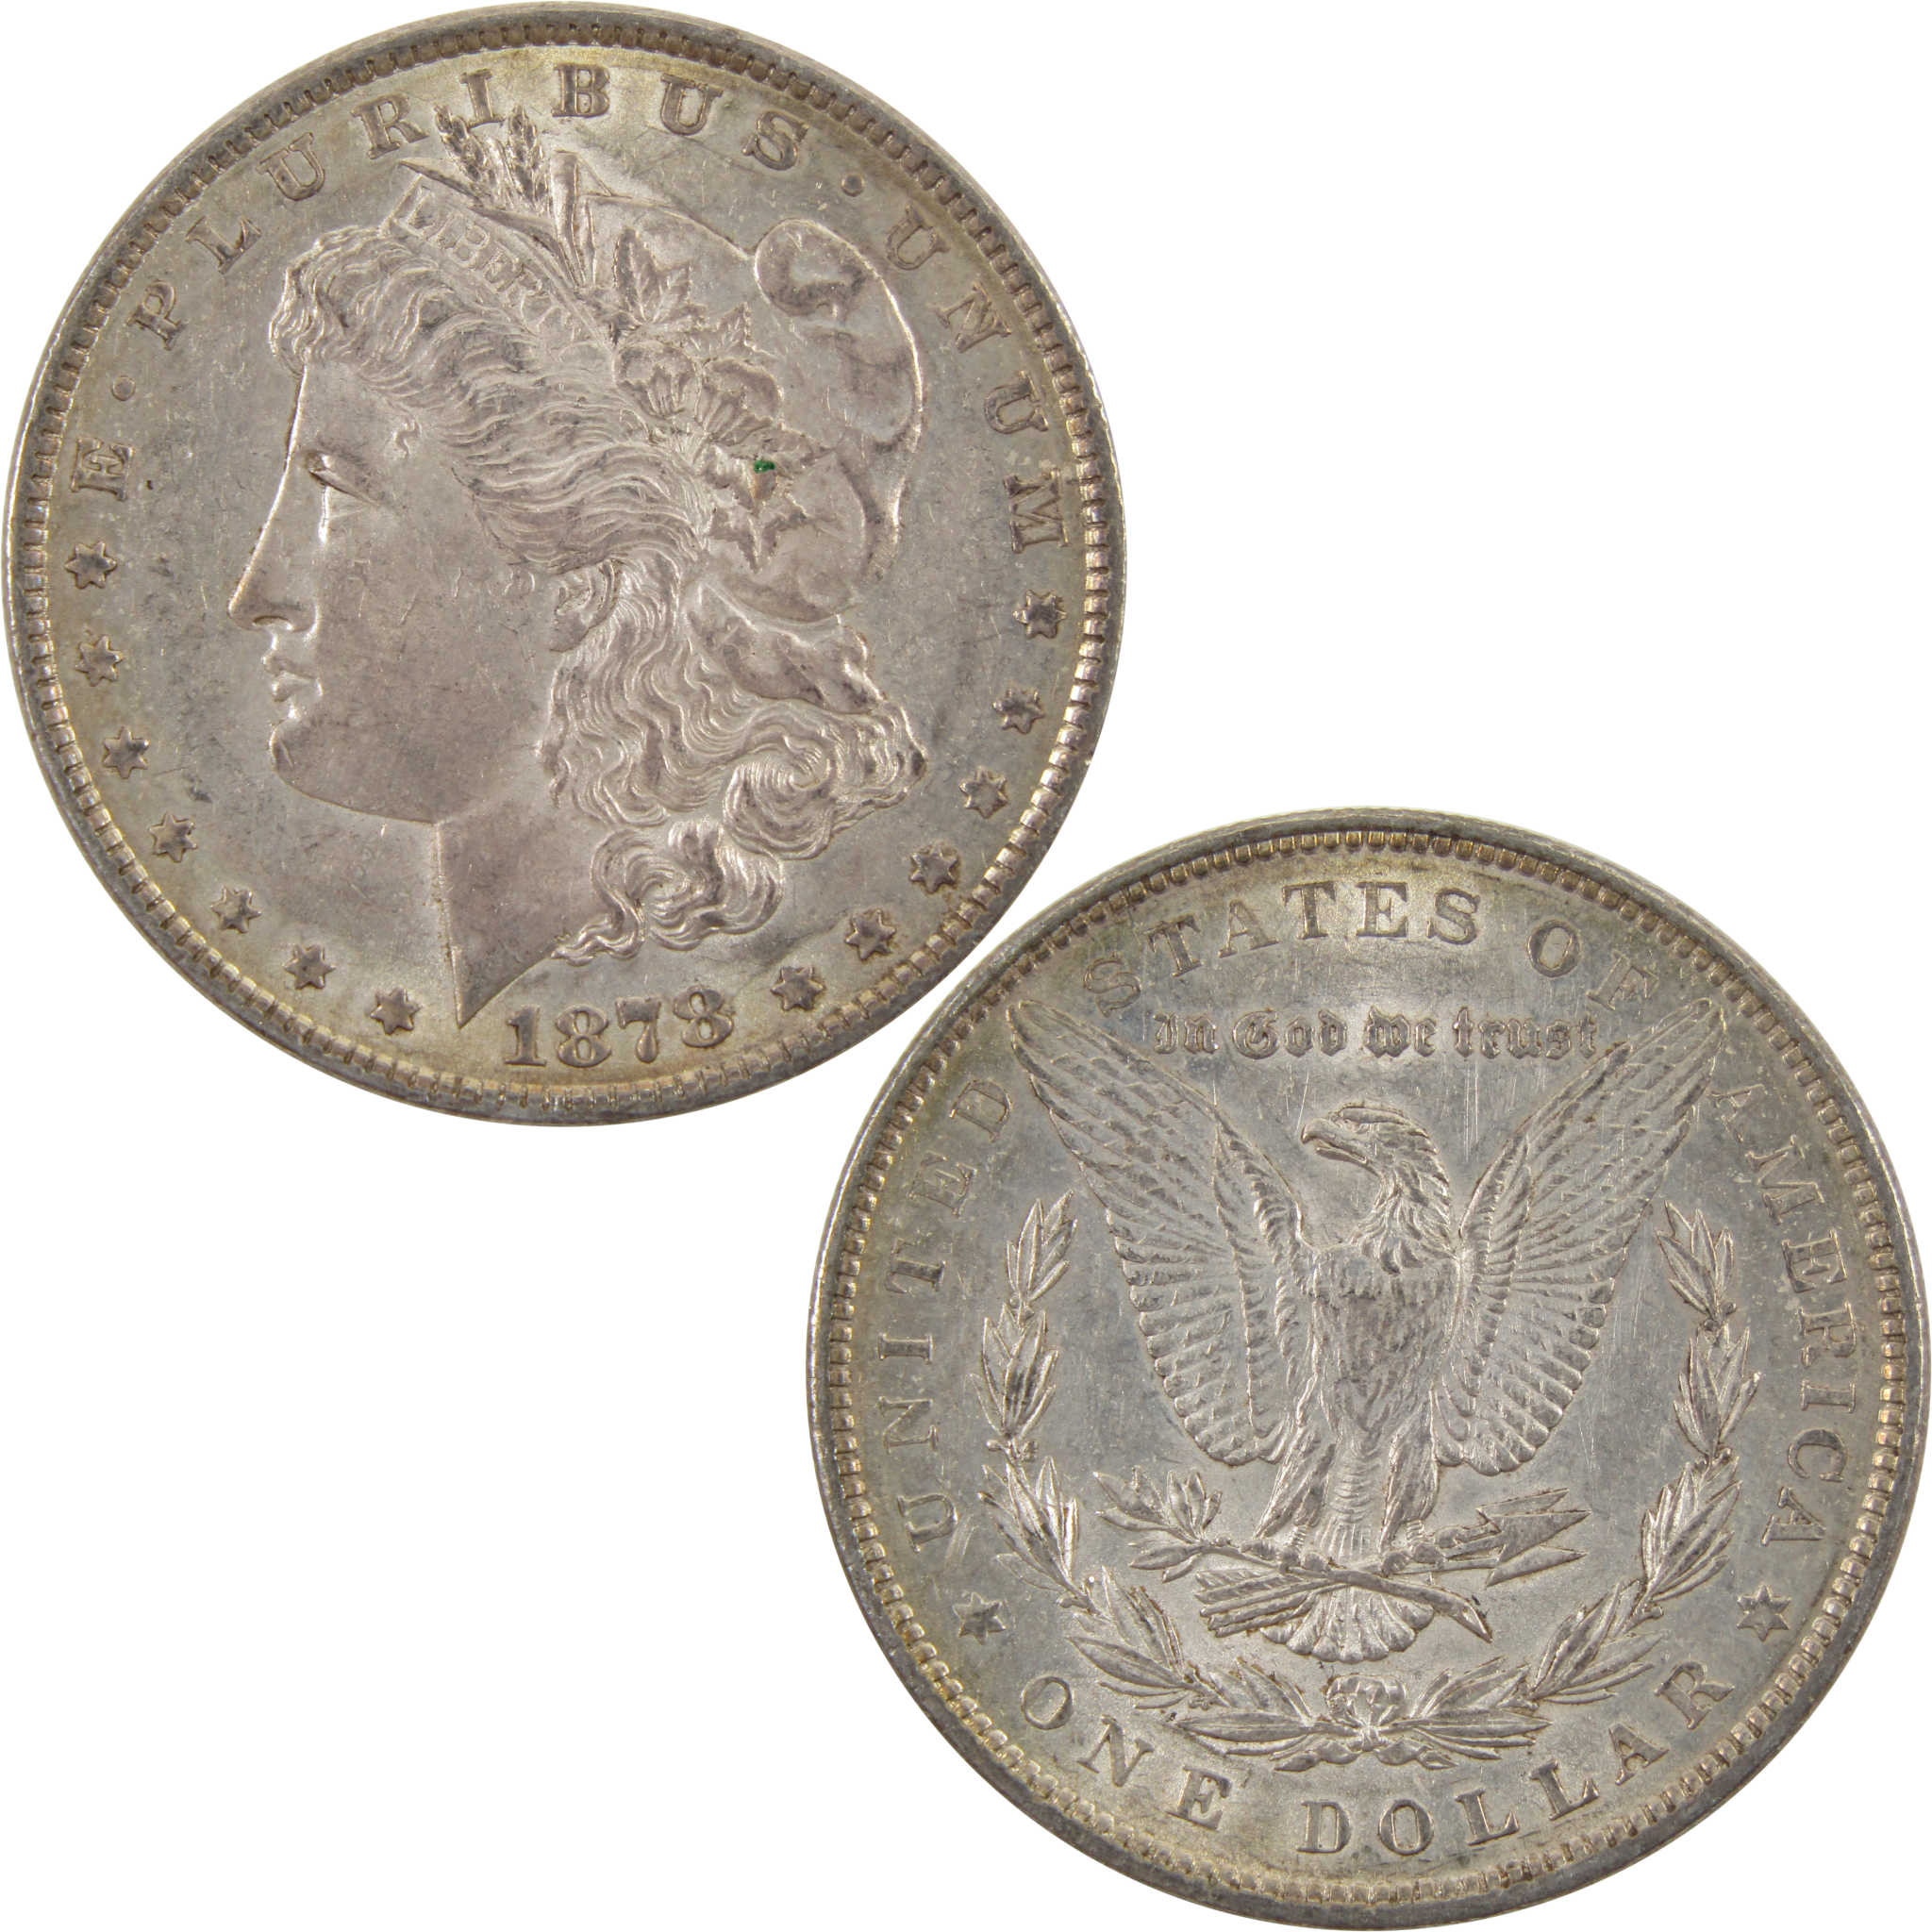 1879 Morgan Dollar Borderline Uncirculated Silver $1 Coin SKU:I11001 - Morgan coin - Morgan silver dollar - Morgan silver dollar for sale - Profile Coins &amp; Collectibles